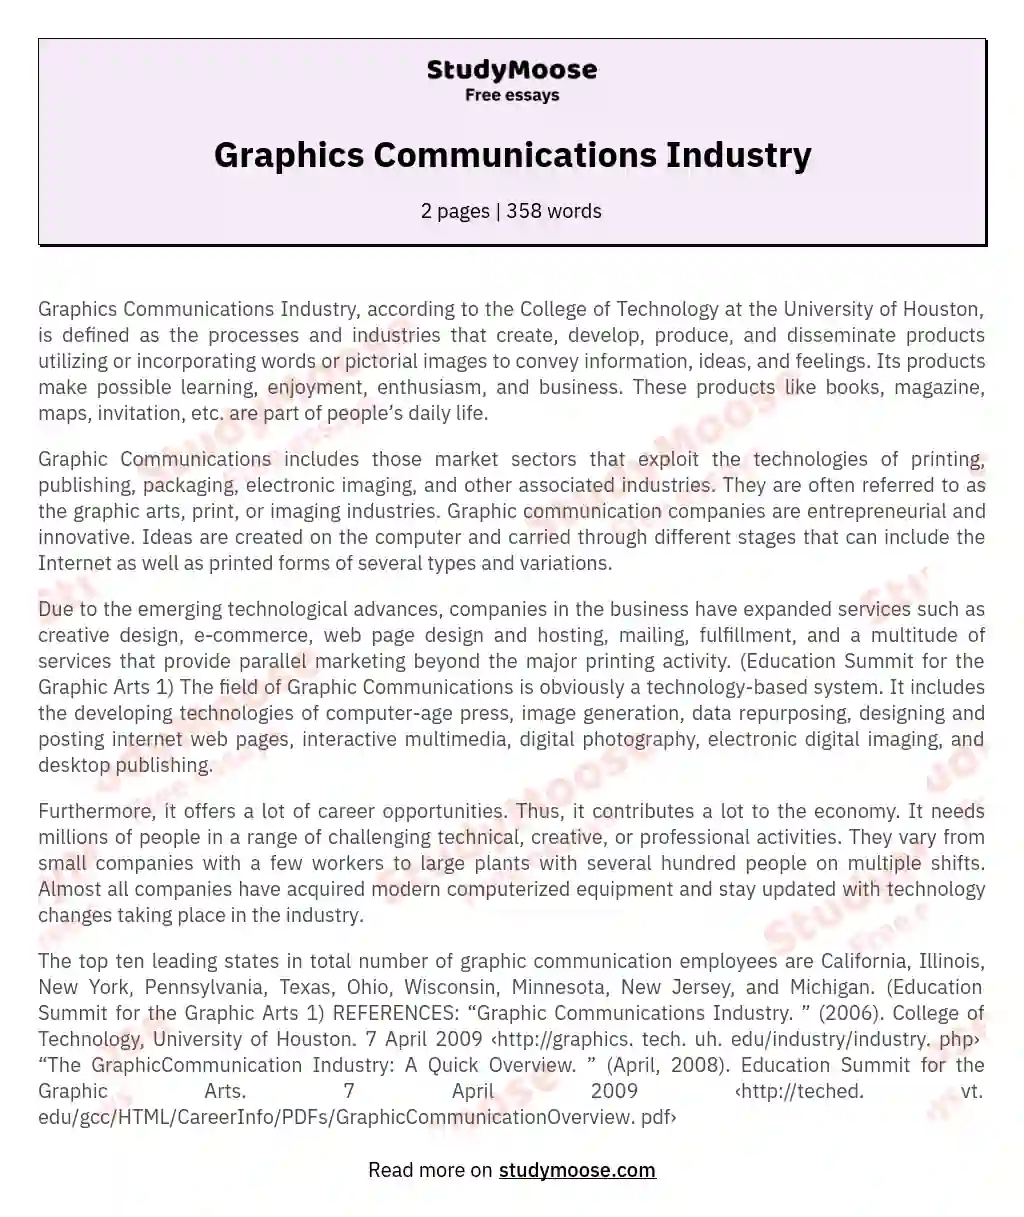 Graphics Communications Industry essay